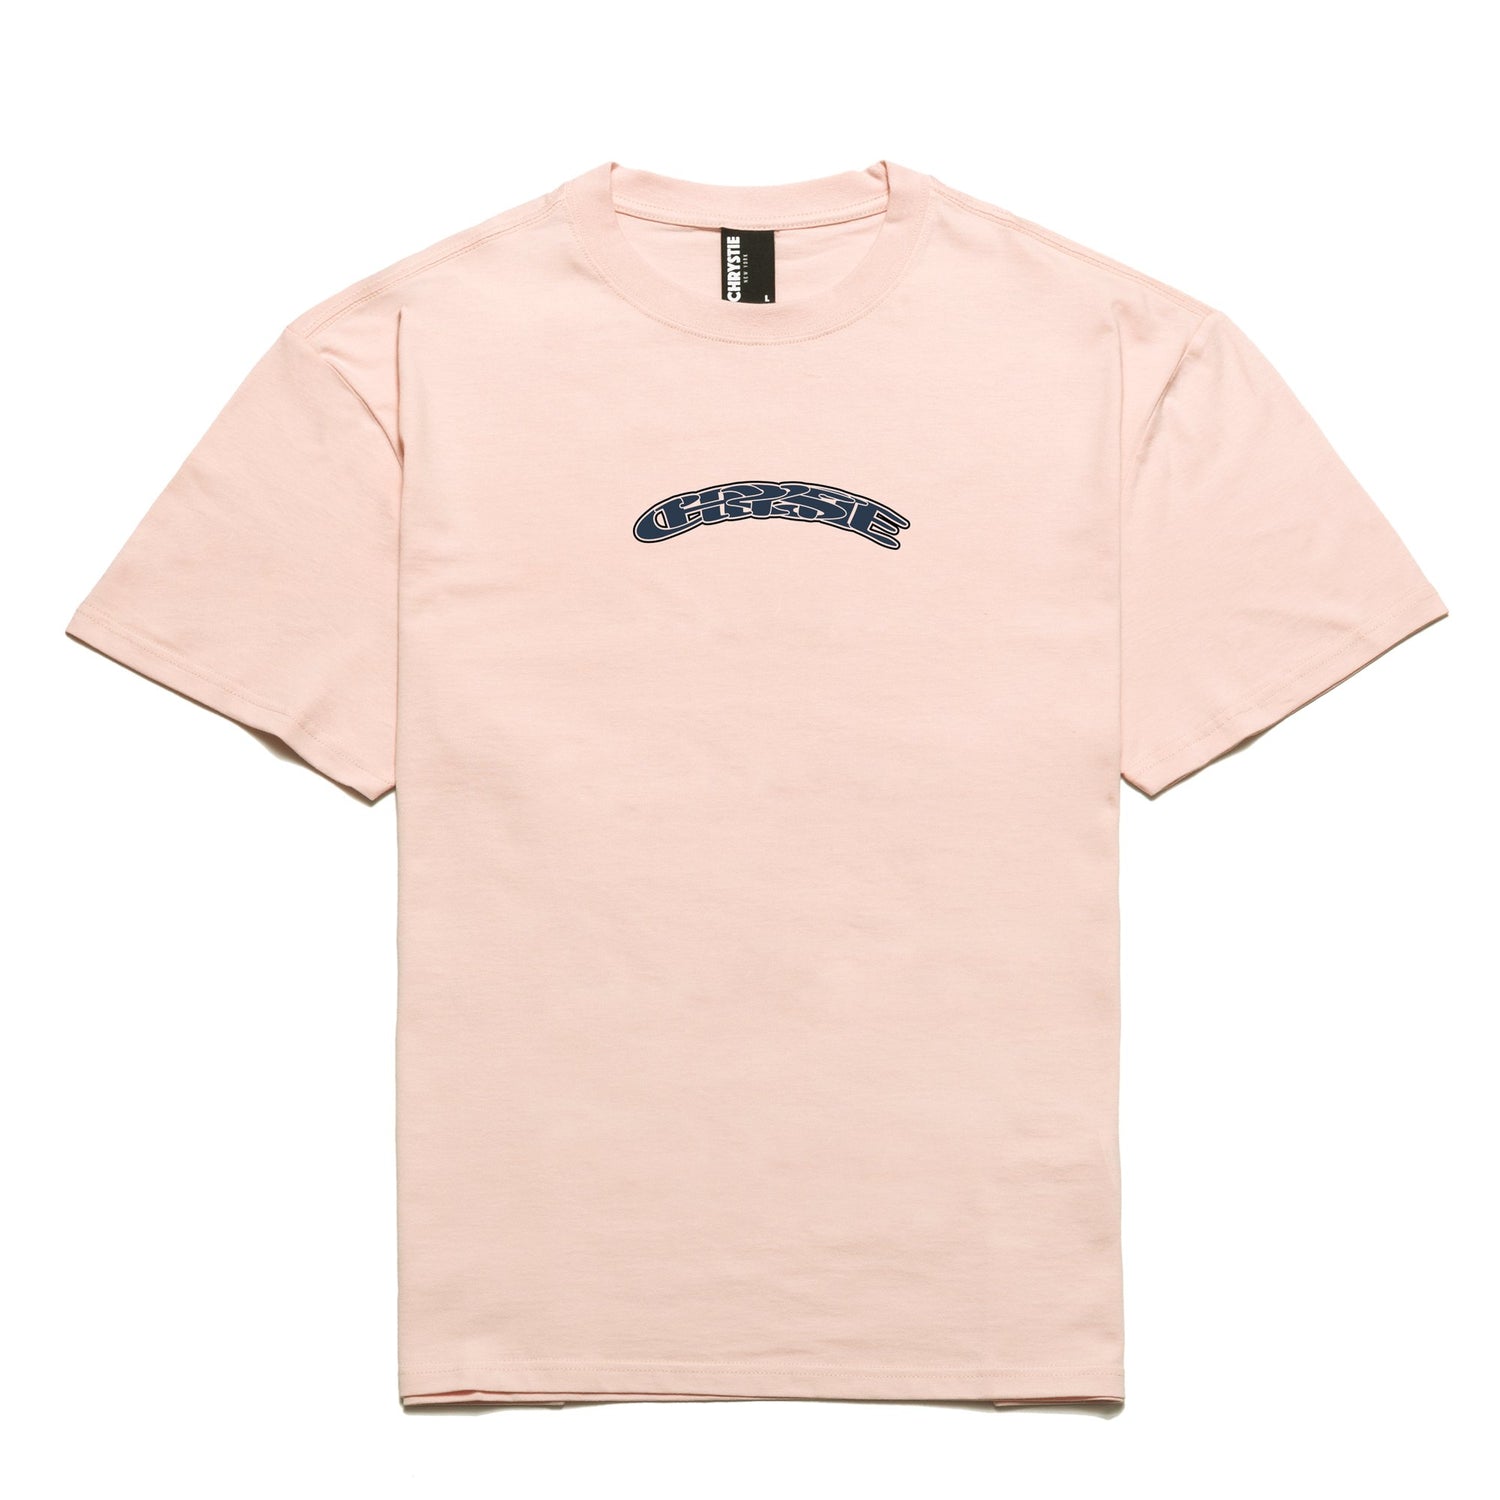 Chrystie NYC x Soho Warriors - SWFC Twisted logo T-Shirt / Light Pink